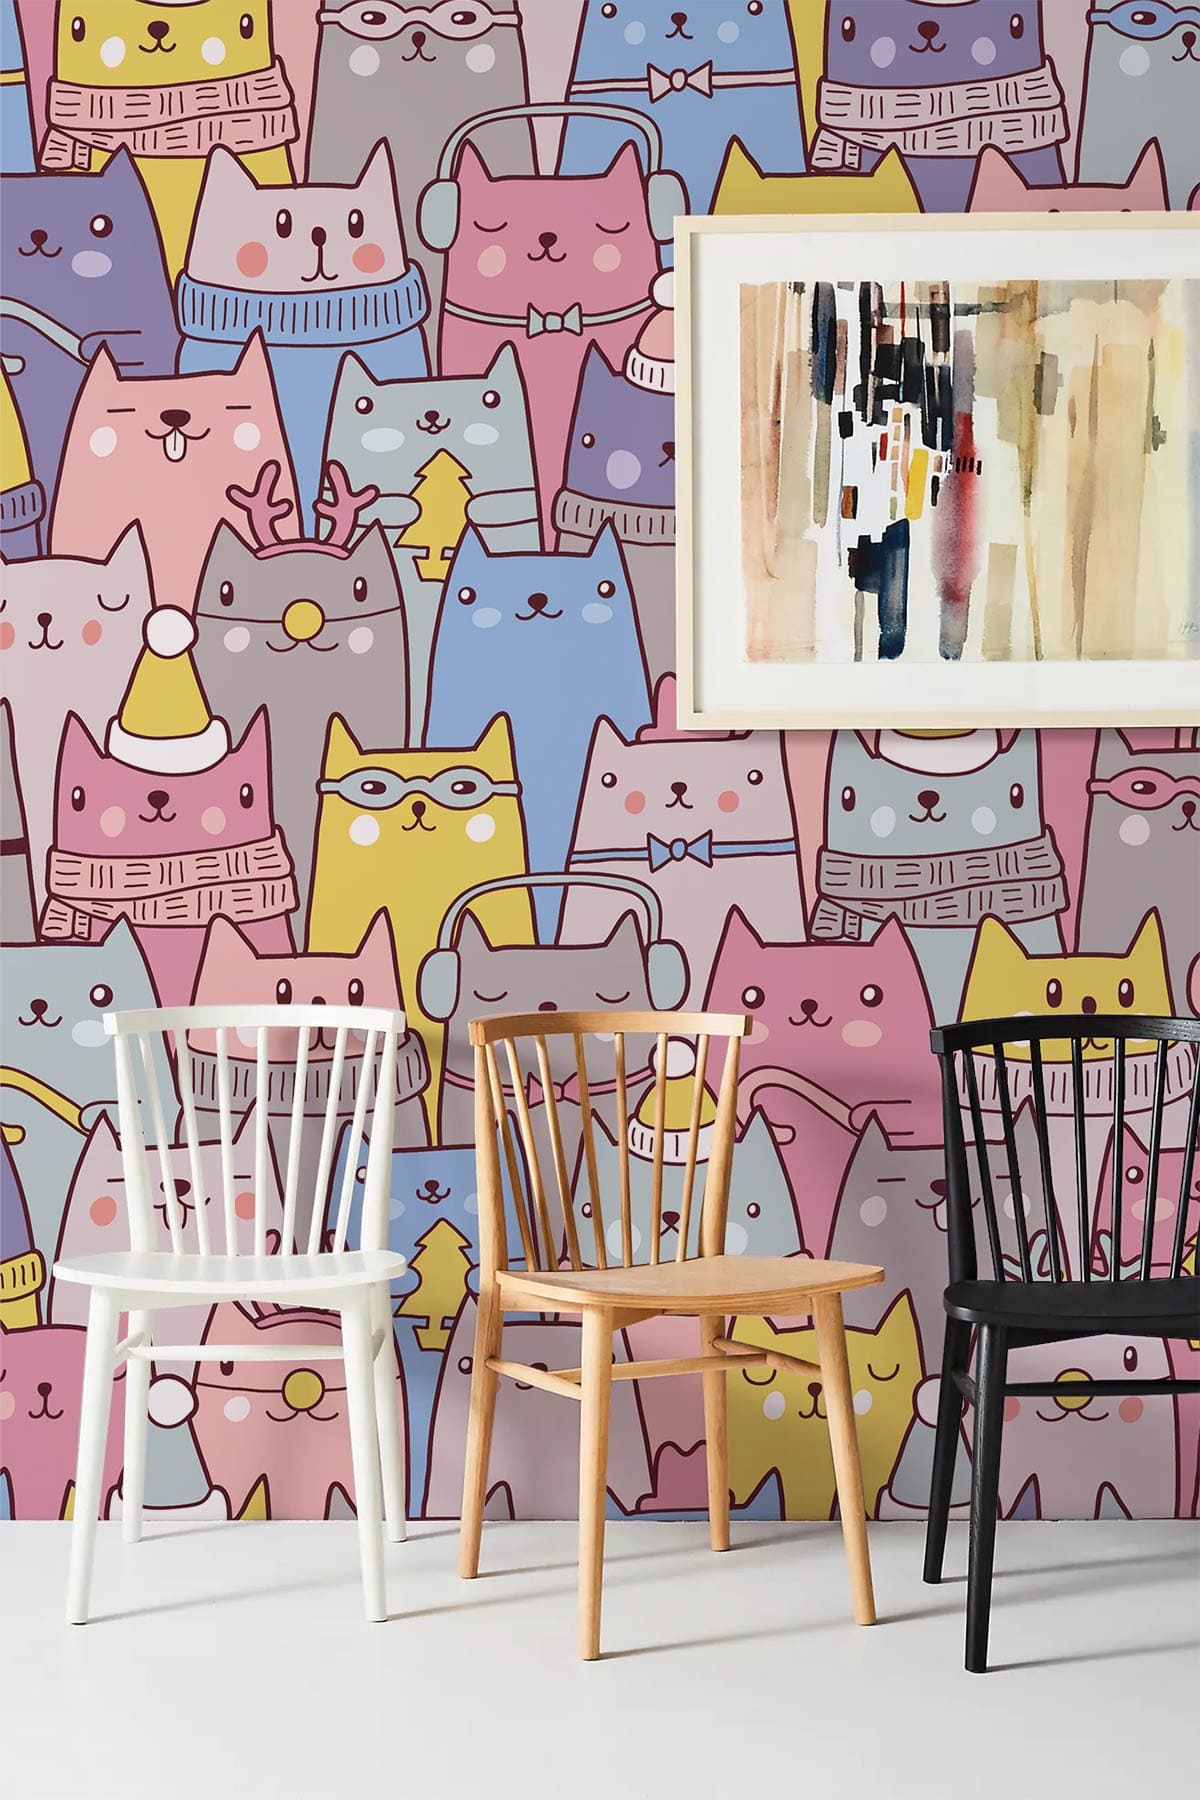 Festival Cartoon Cats Wall Murals for hallway decor